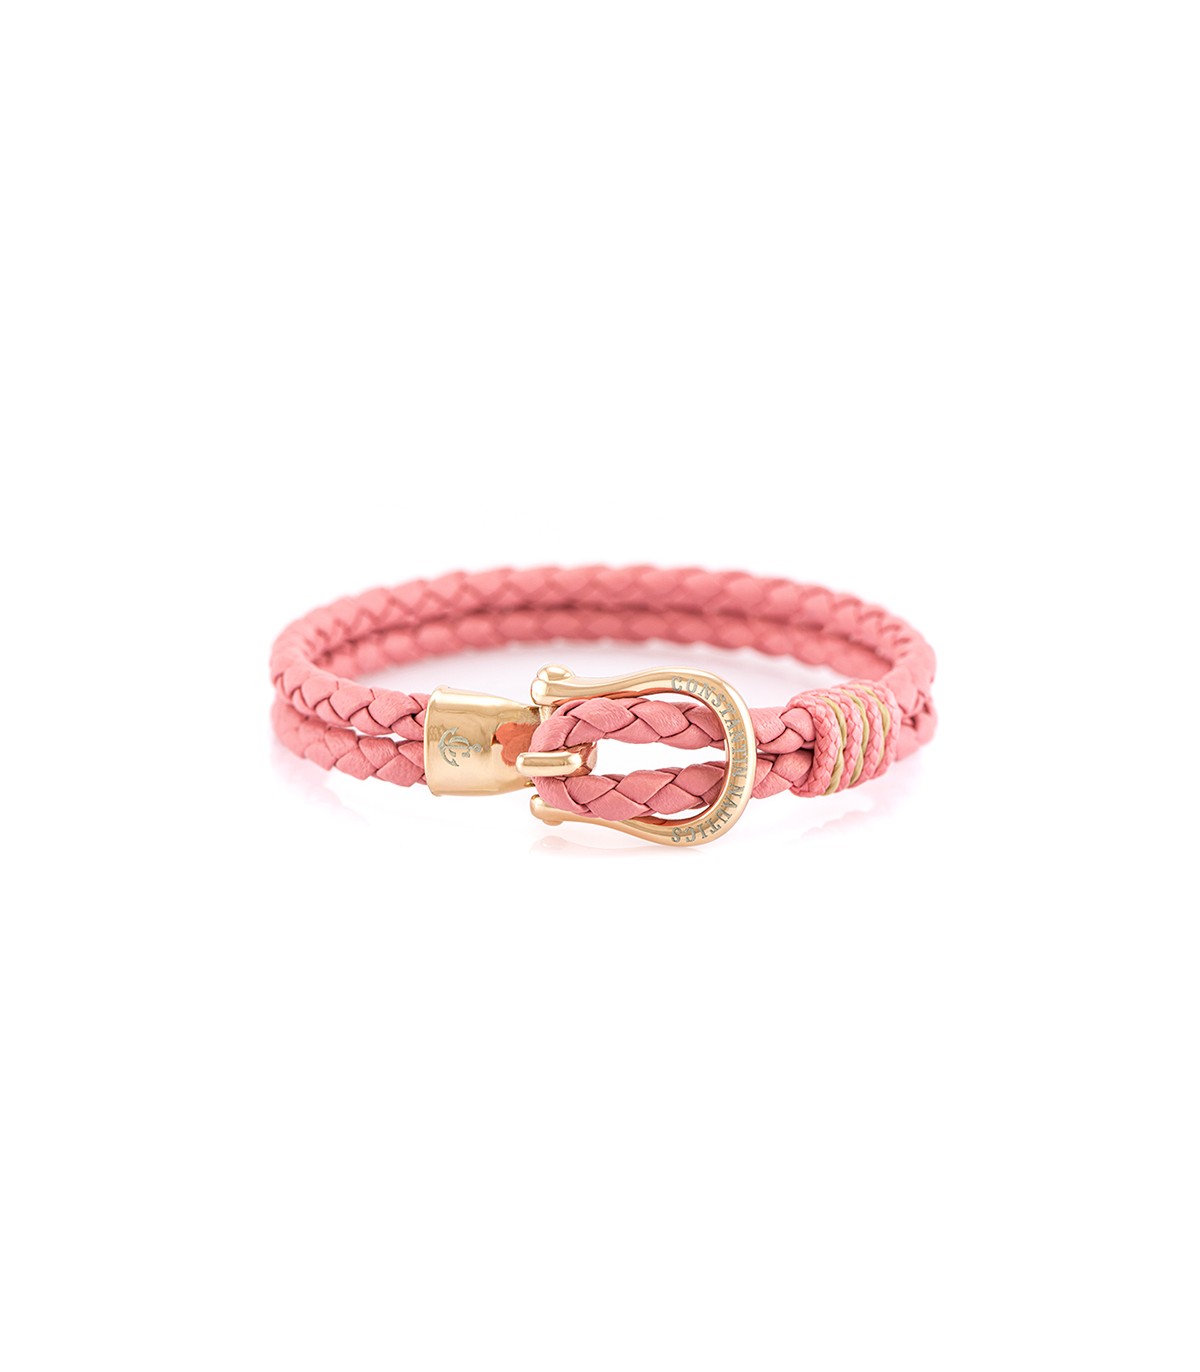 Constantin Maritime Leather Bracelet, Pink